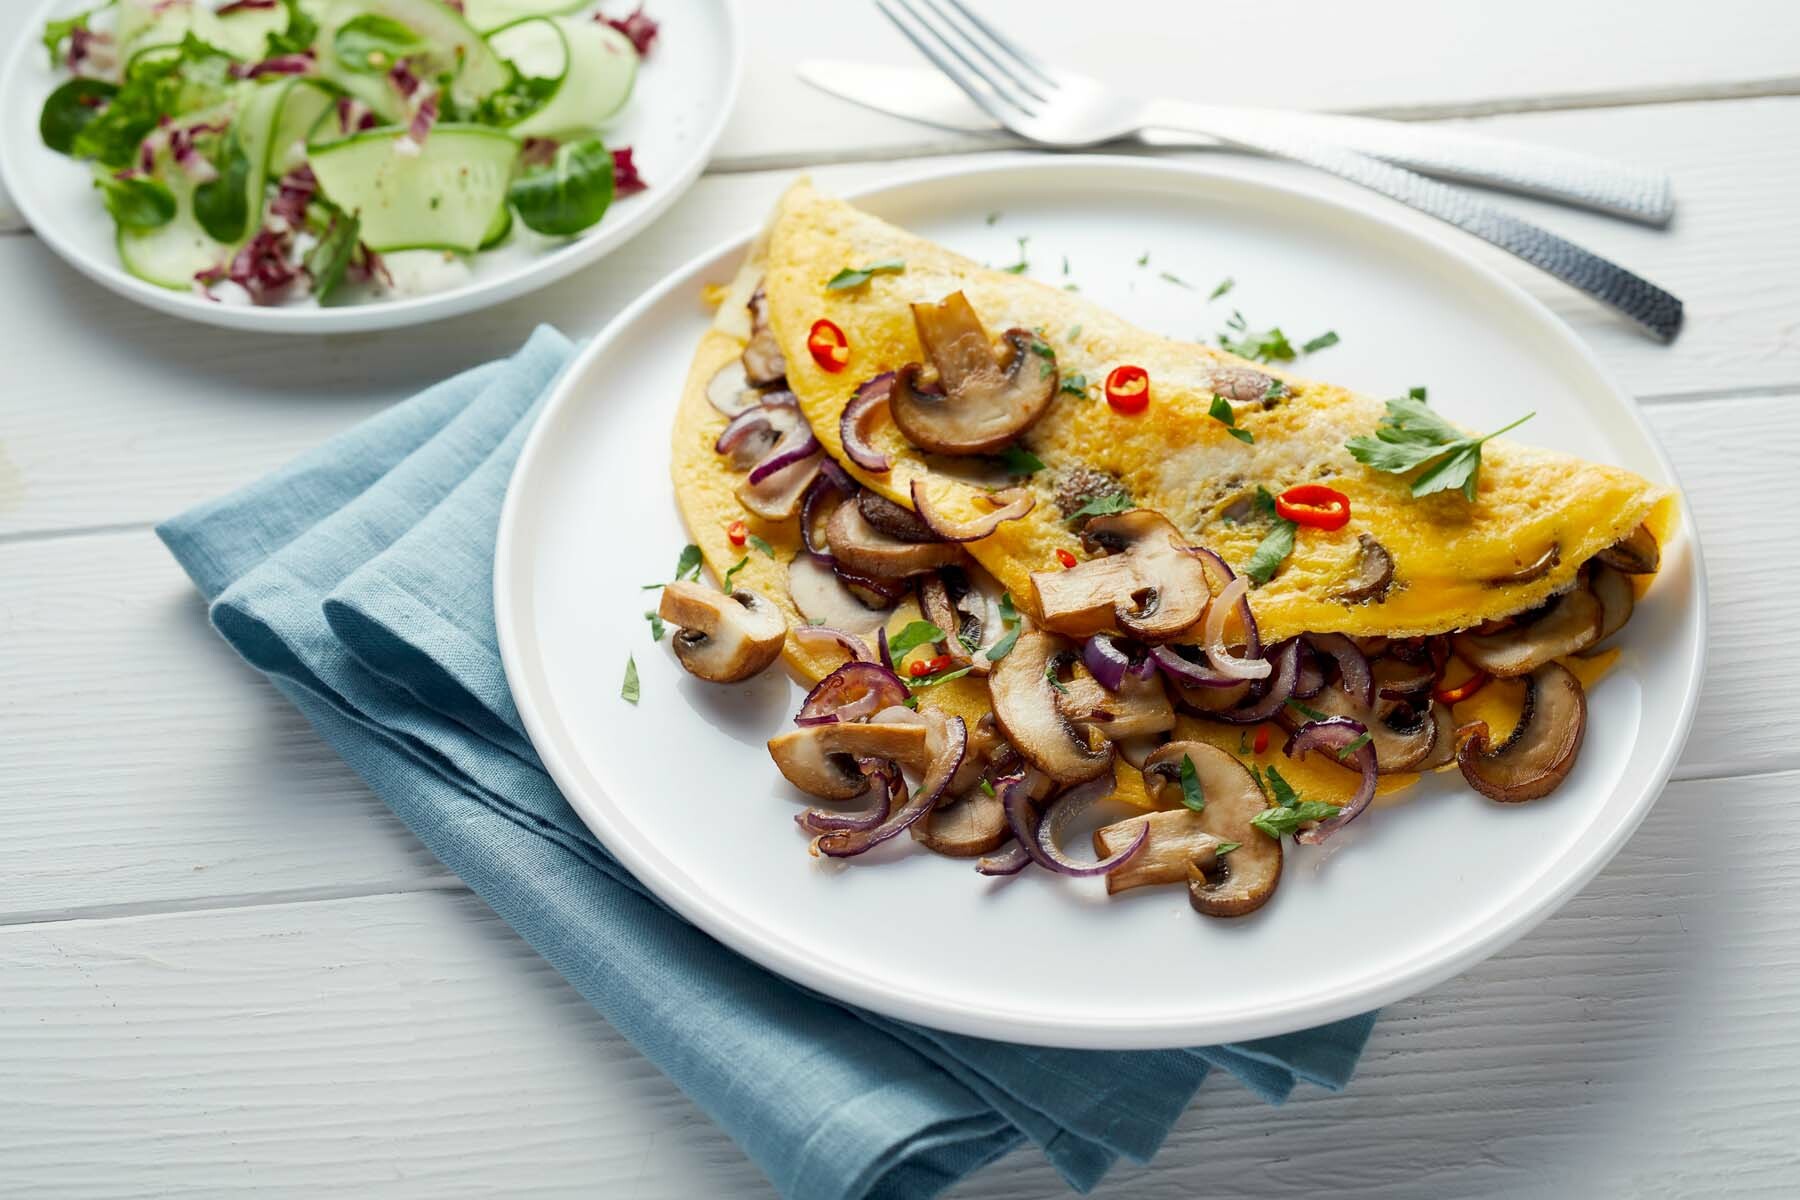 Chili, Cheese, and Garlic Mushroom Omelette Recipe Image